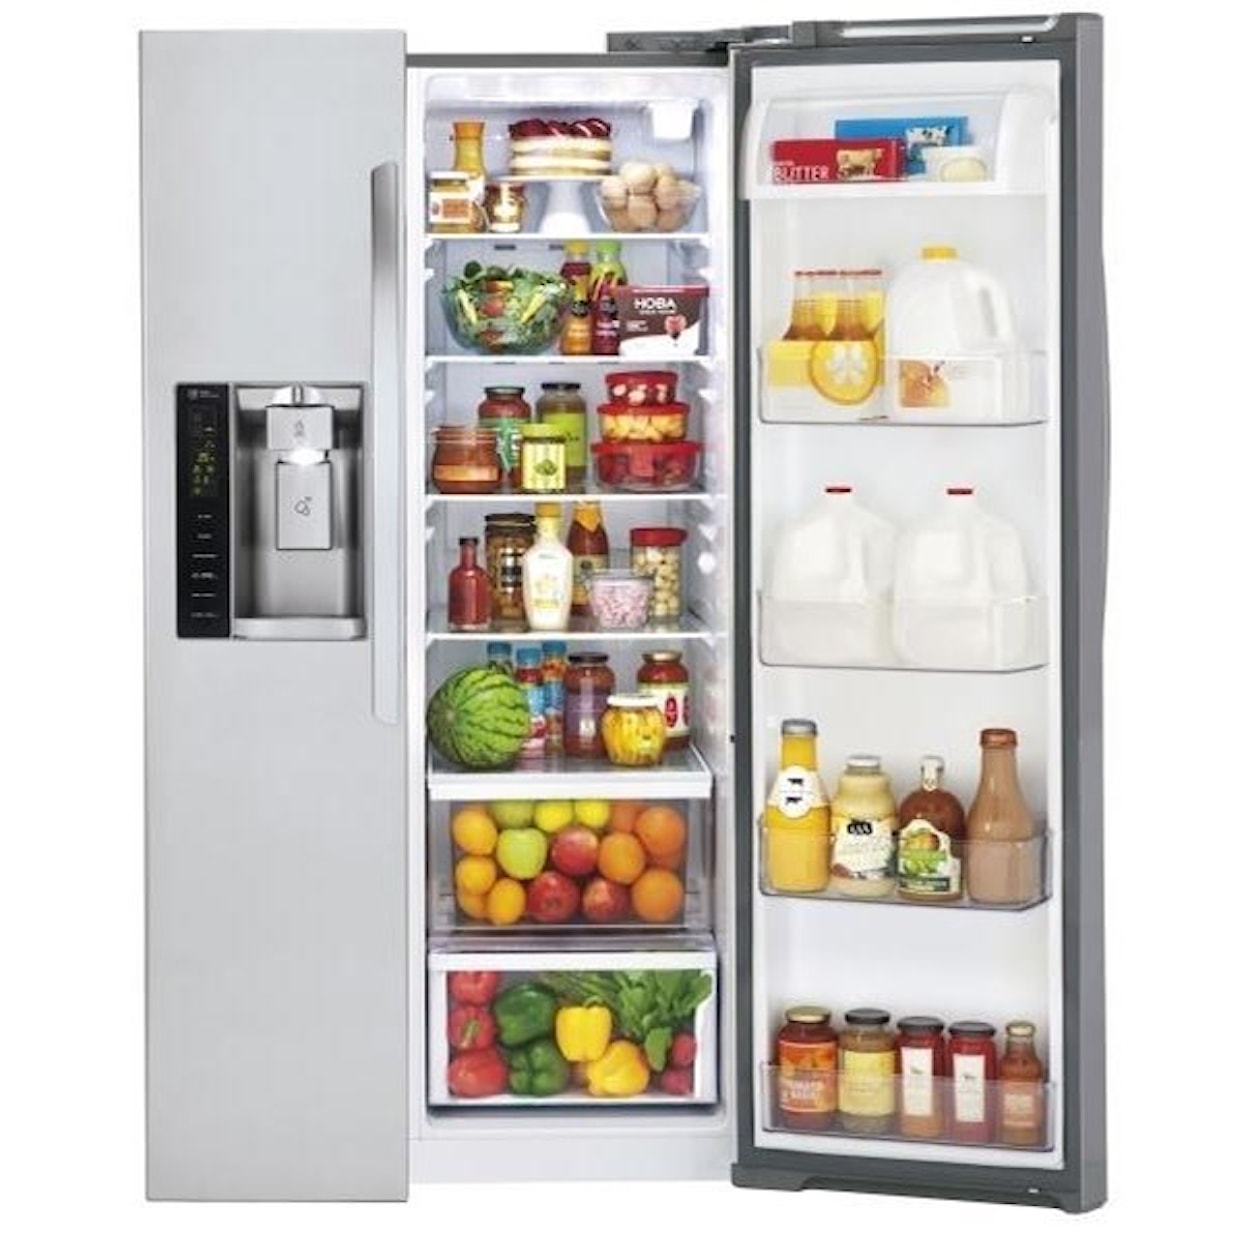 LG Appliances Side by Side Refrigerators 22 cu. ft. Counter-Depth Refrigerator